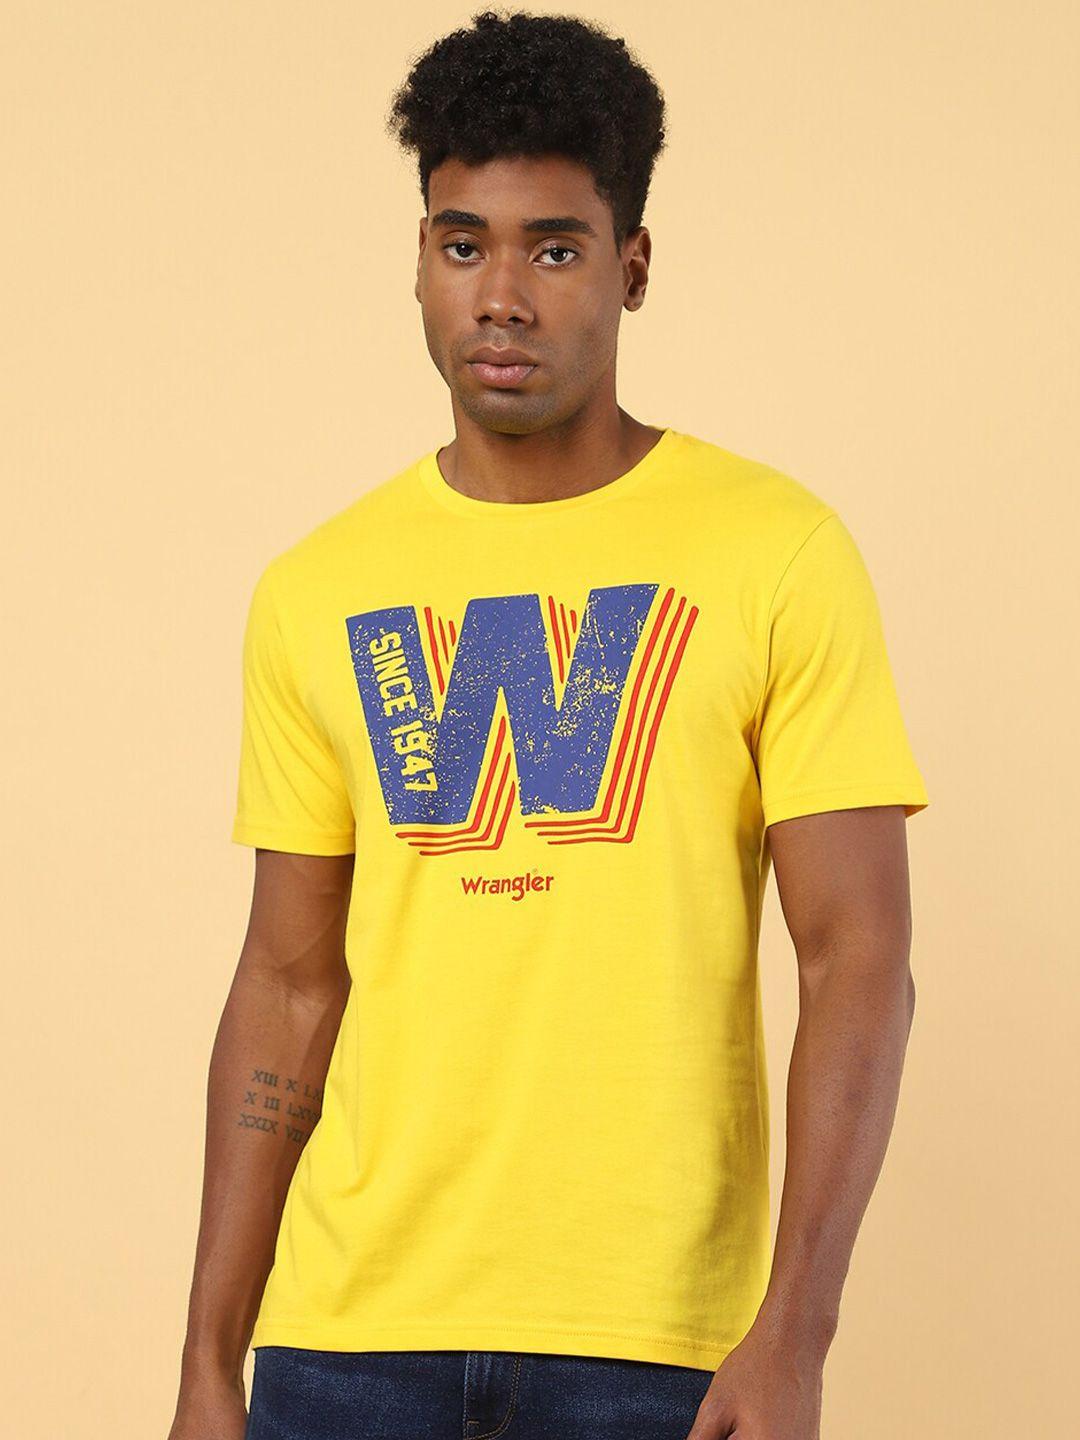 wrangler graphic printed short sleeves cotton t-shirt